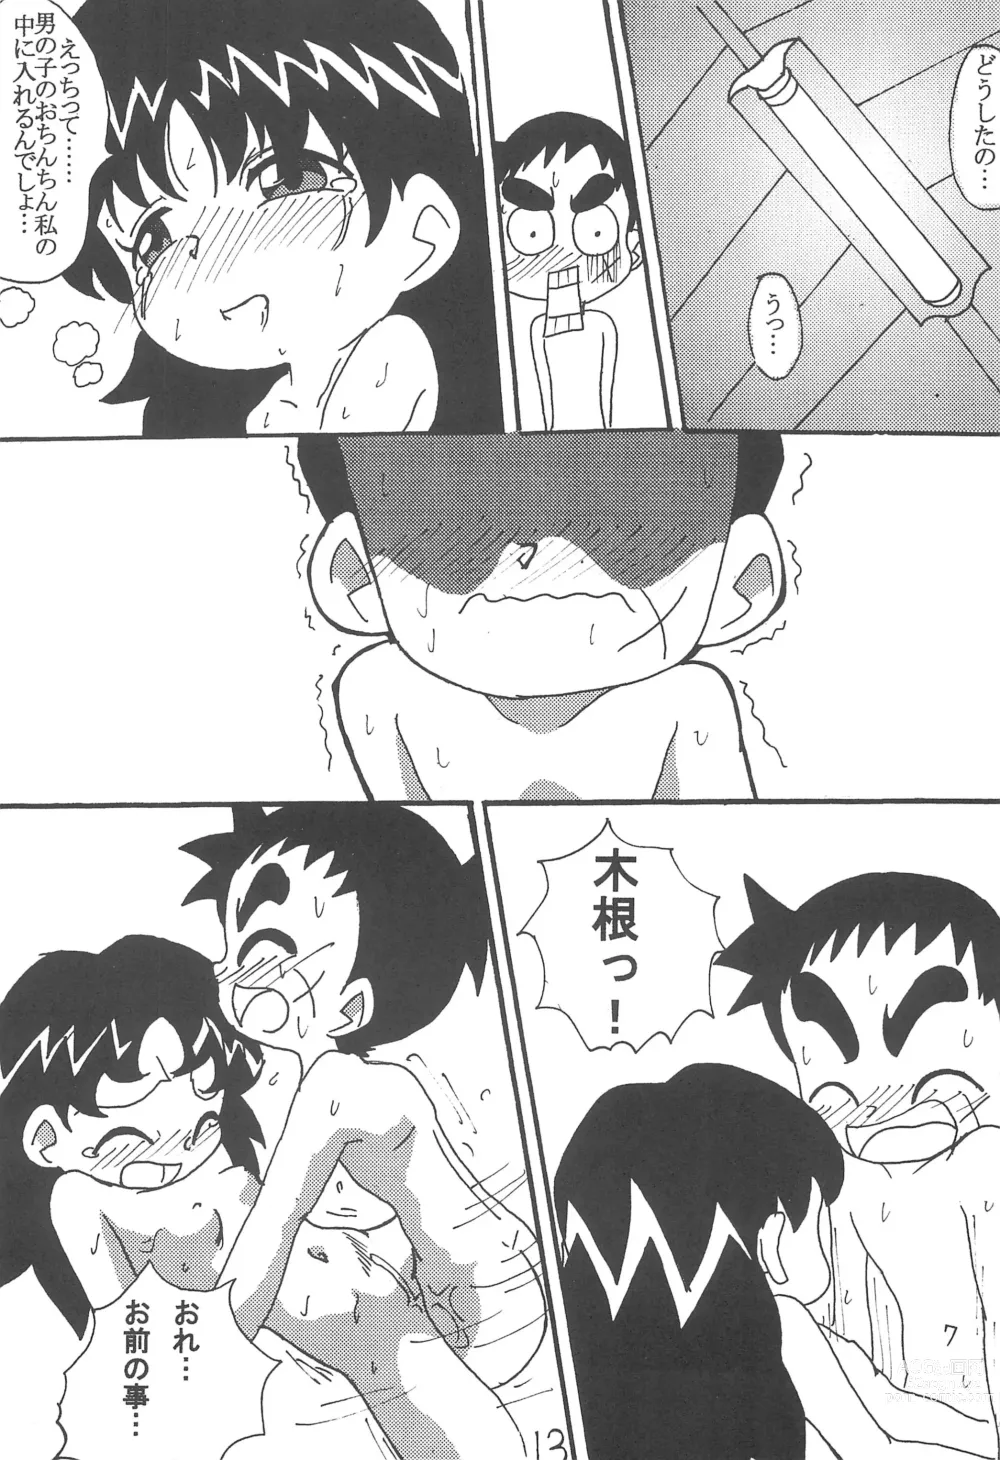 Page 13 of doujinshi Mou Hitotsu no Omoide